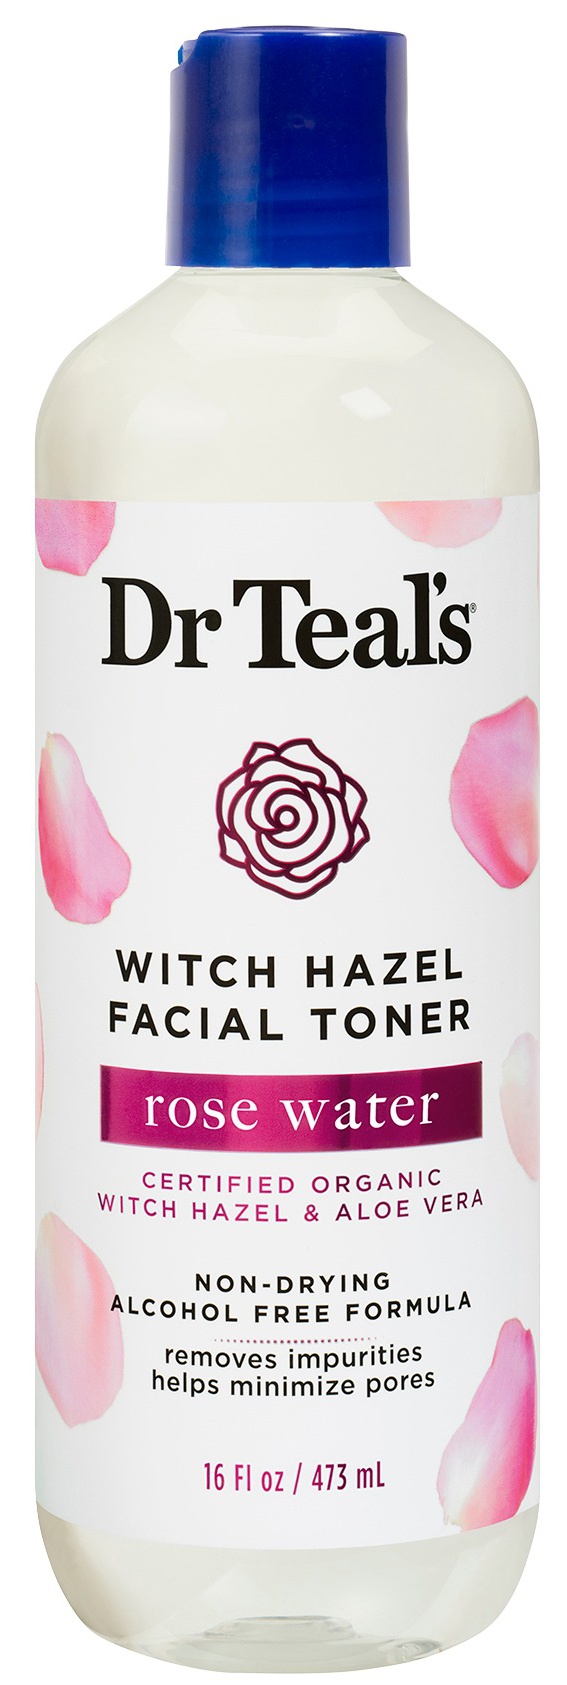 Dr. Teal's Witch Hazel Facial Toner